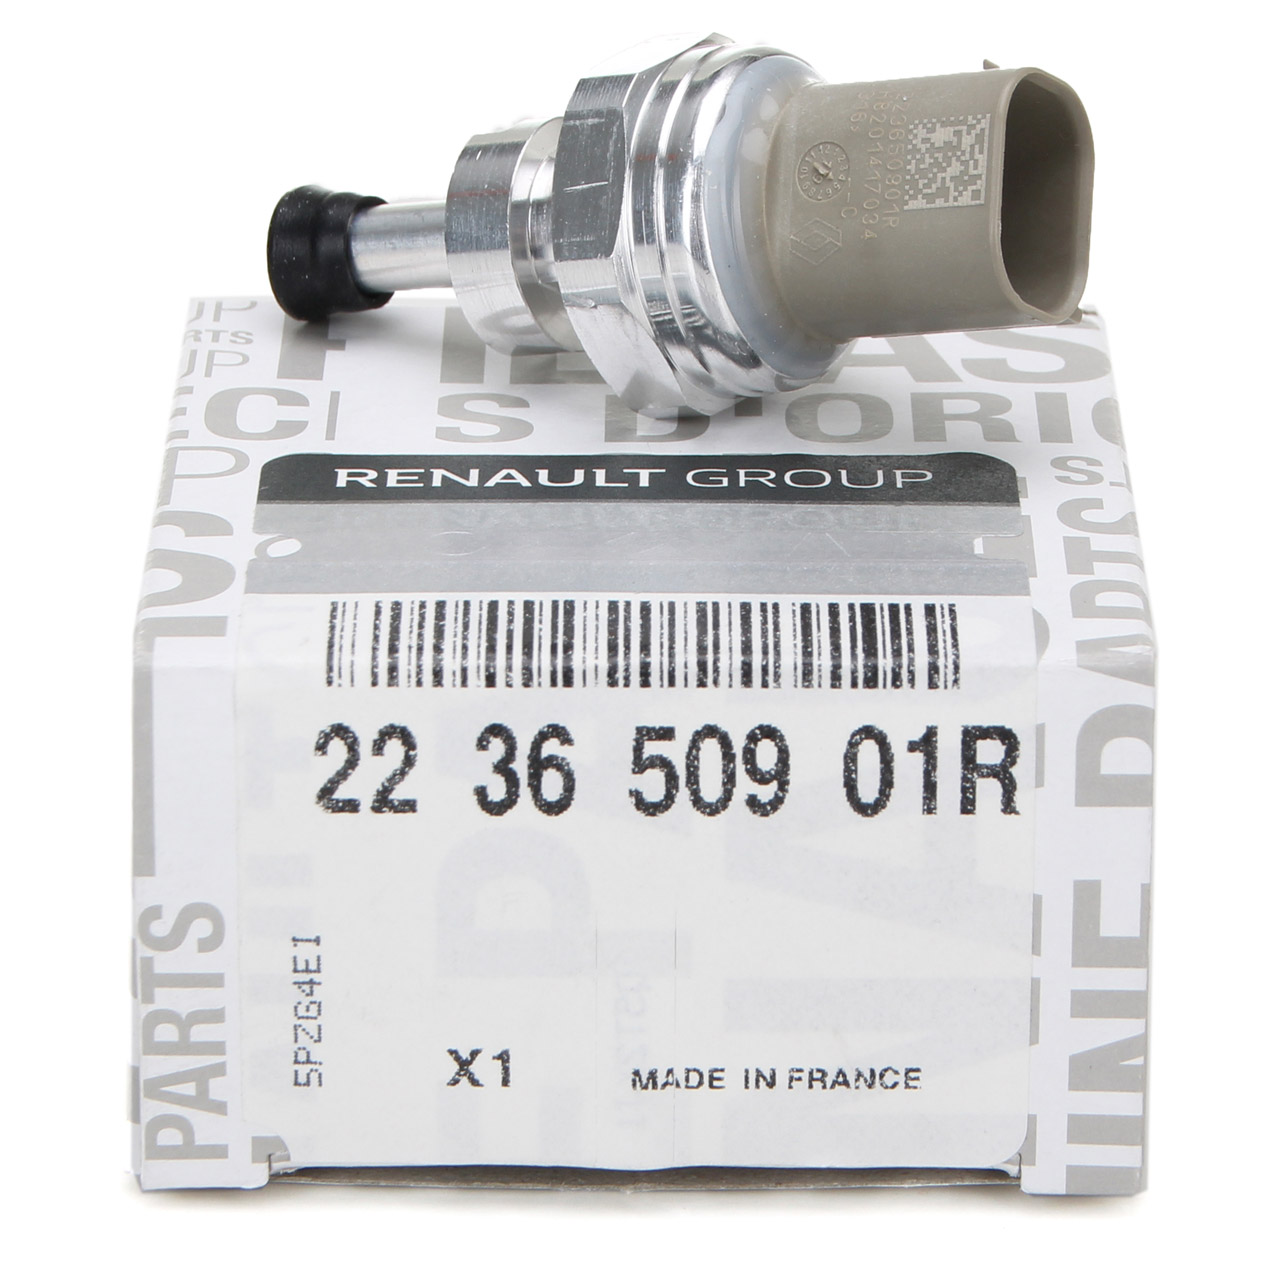 ORIGINAL Renault Abgasdrucksensoren Drucksensor MEGANE 1.5 / 1.6 dCi 223650901R